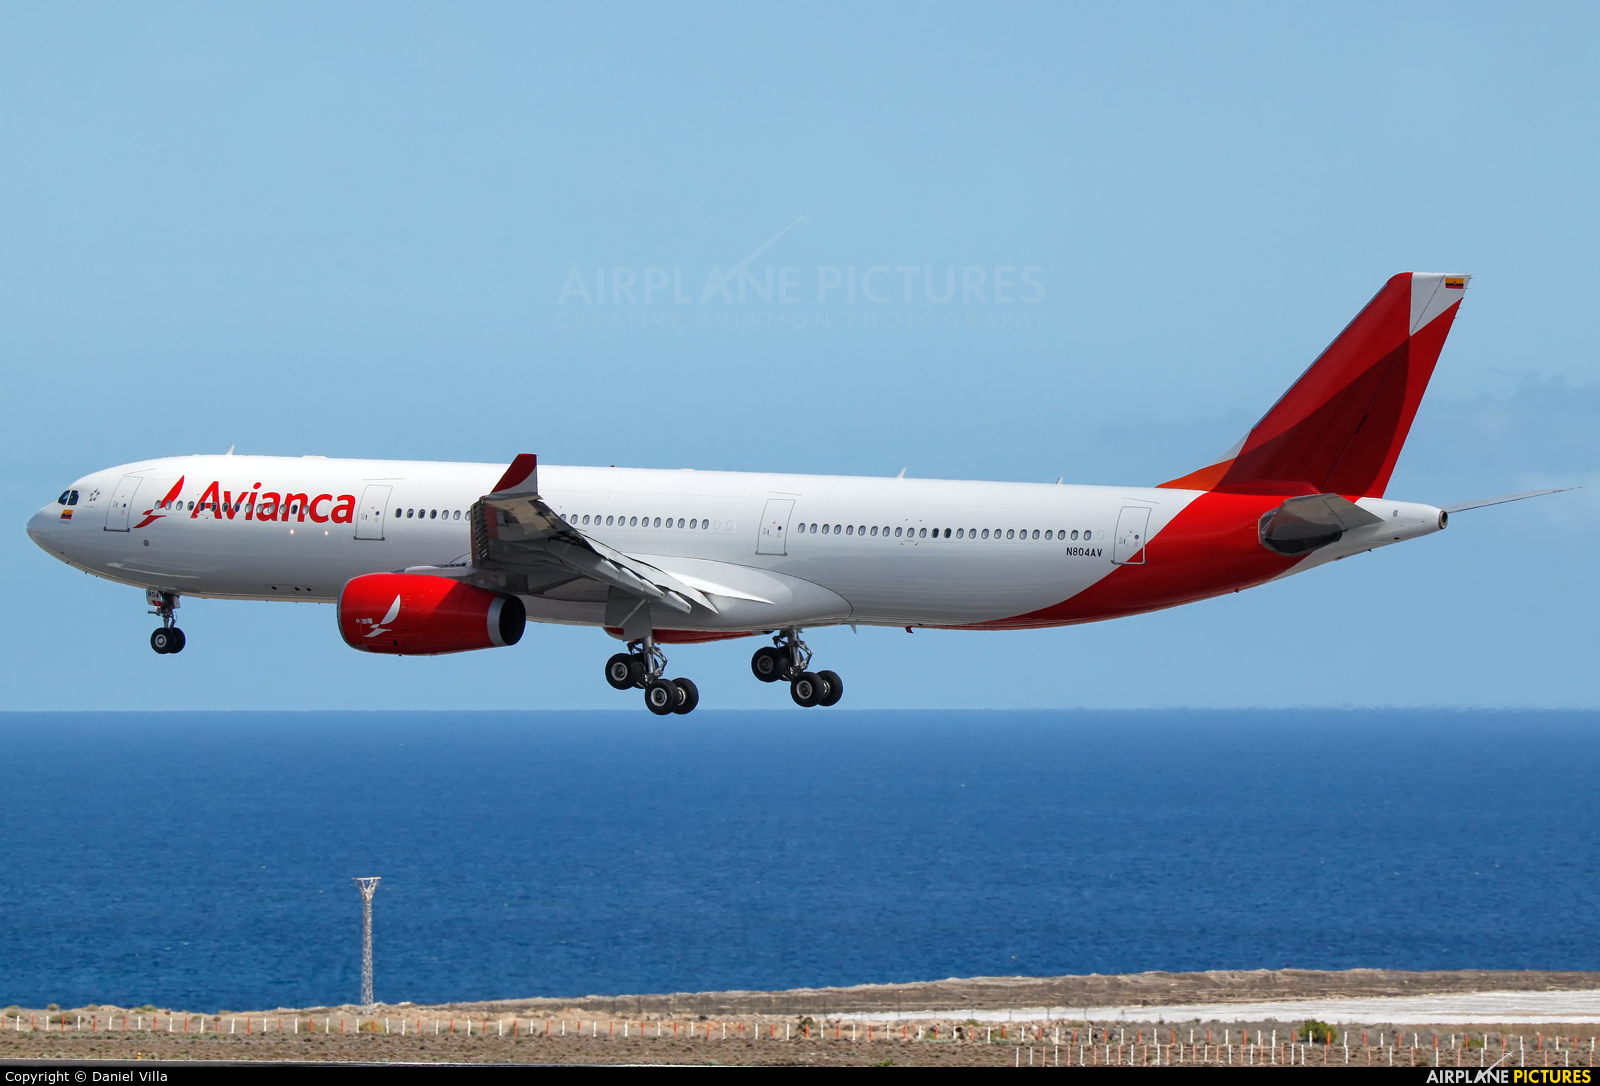 N804av Avianca Airbus A330 300 At Tenerife Sur Reina